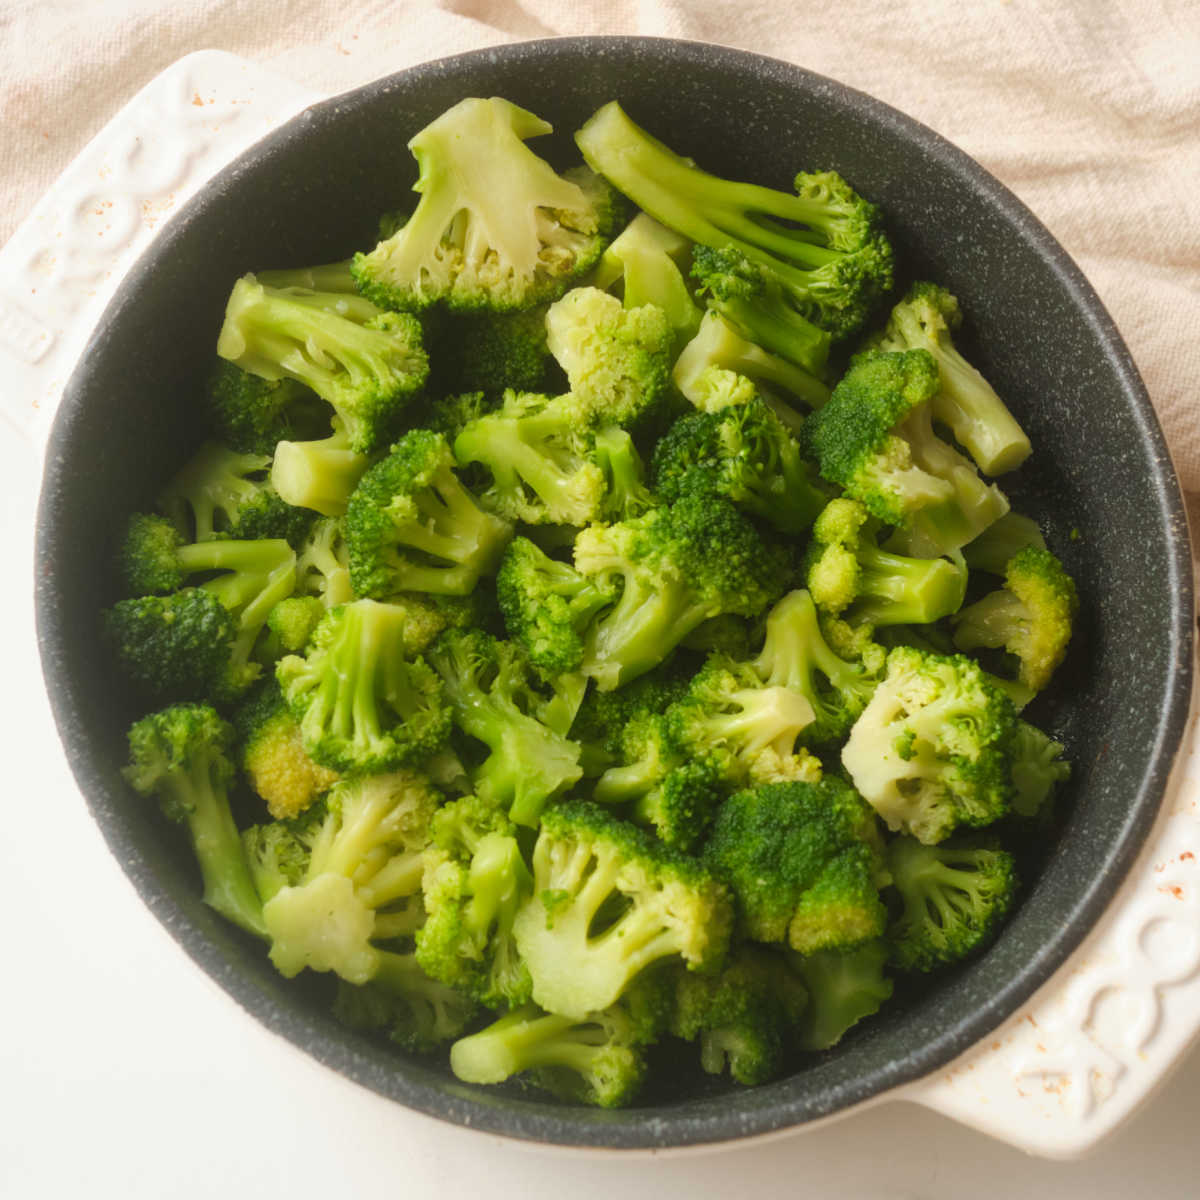 chopped broccoli in baking dish